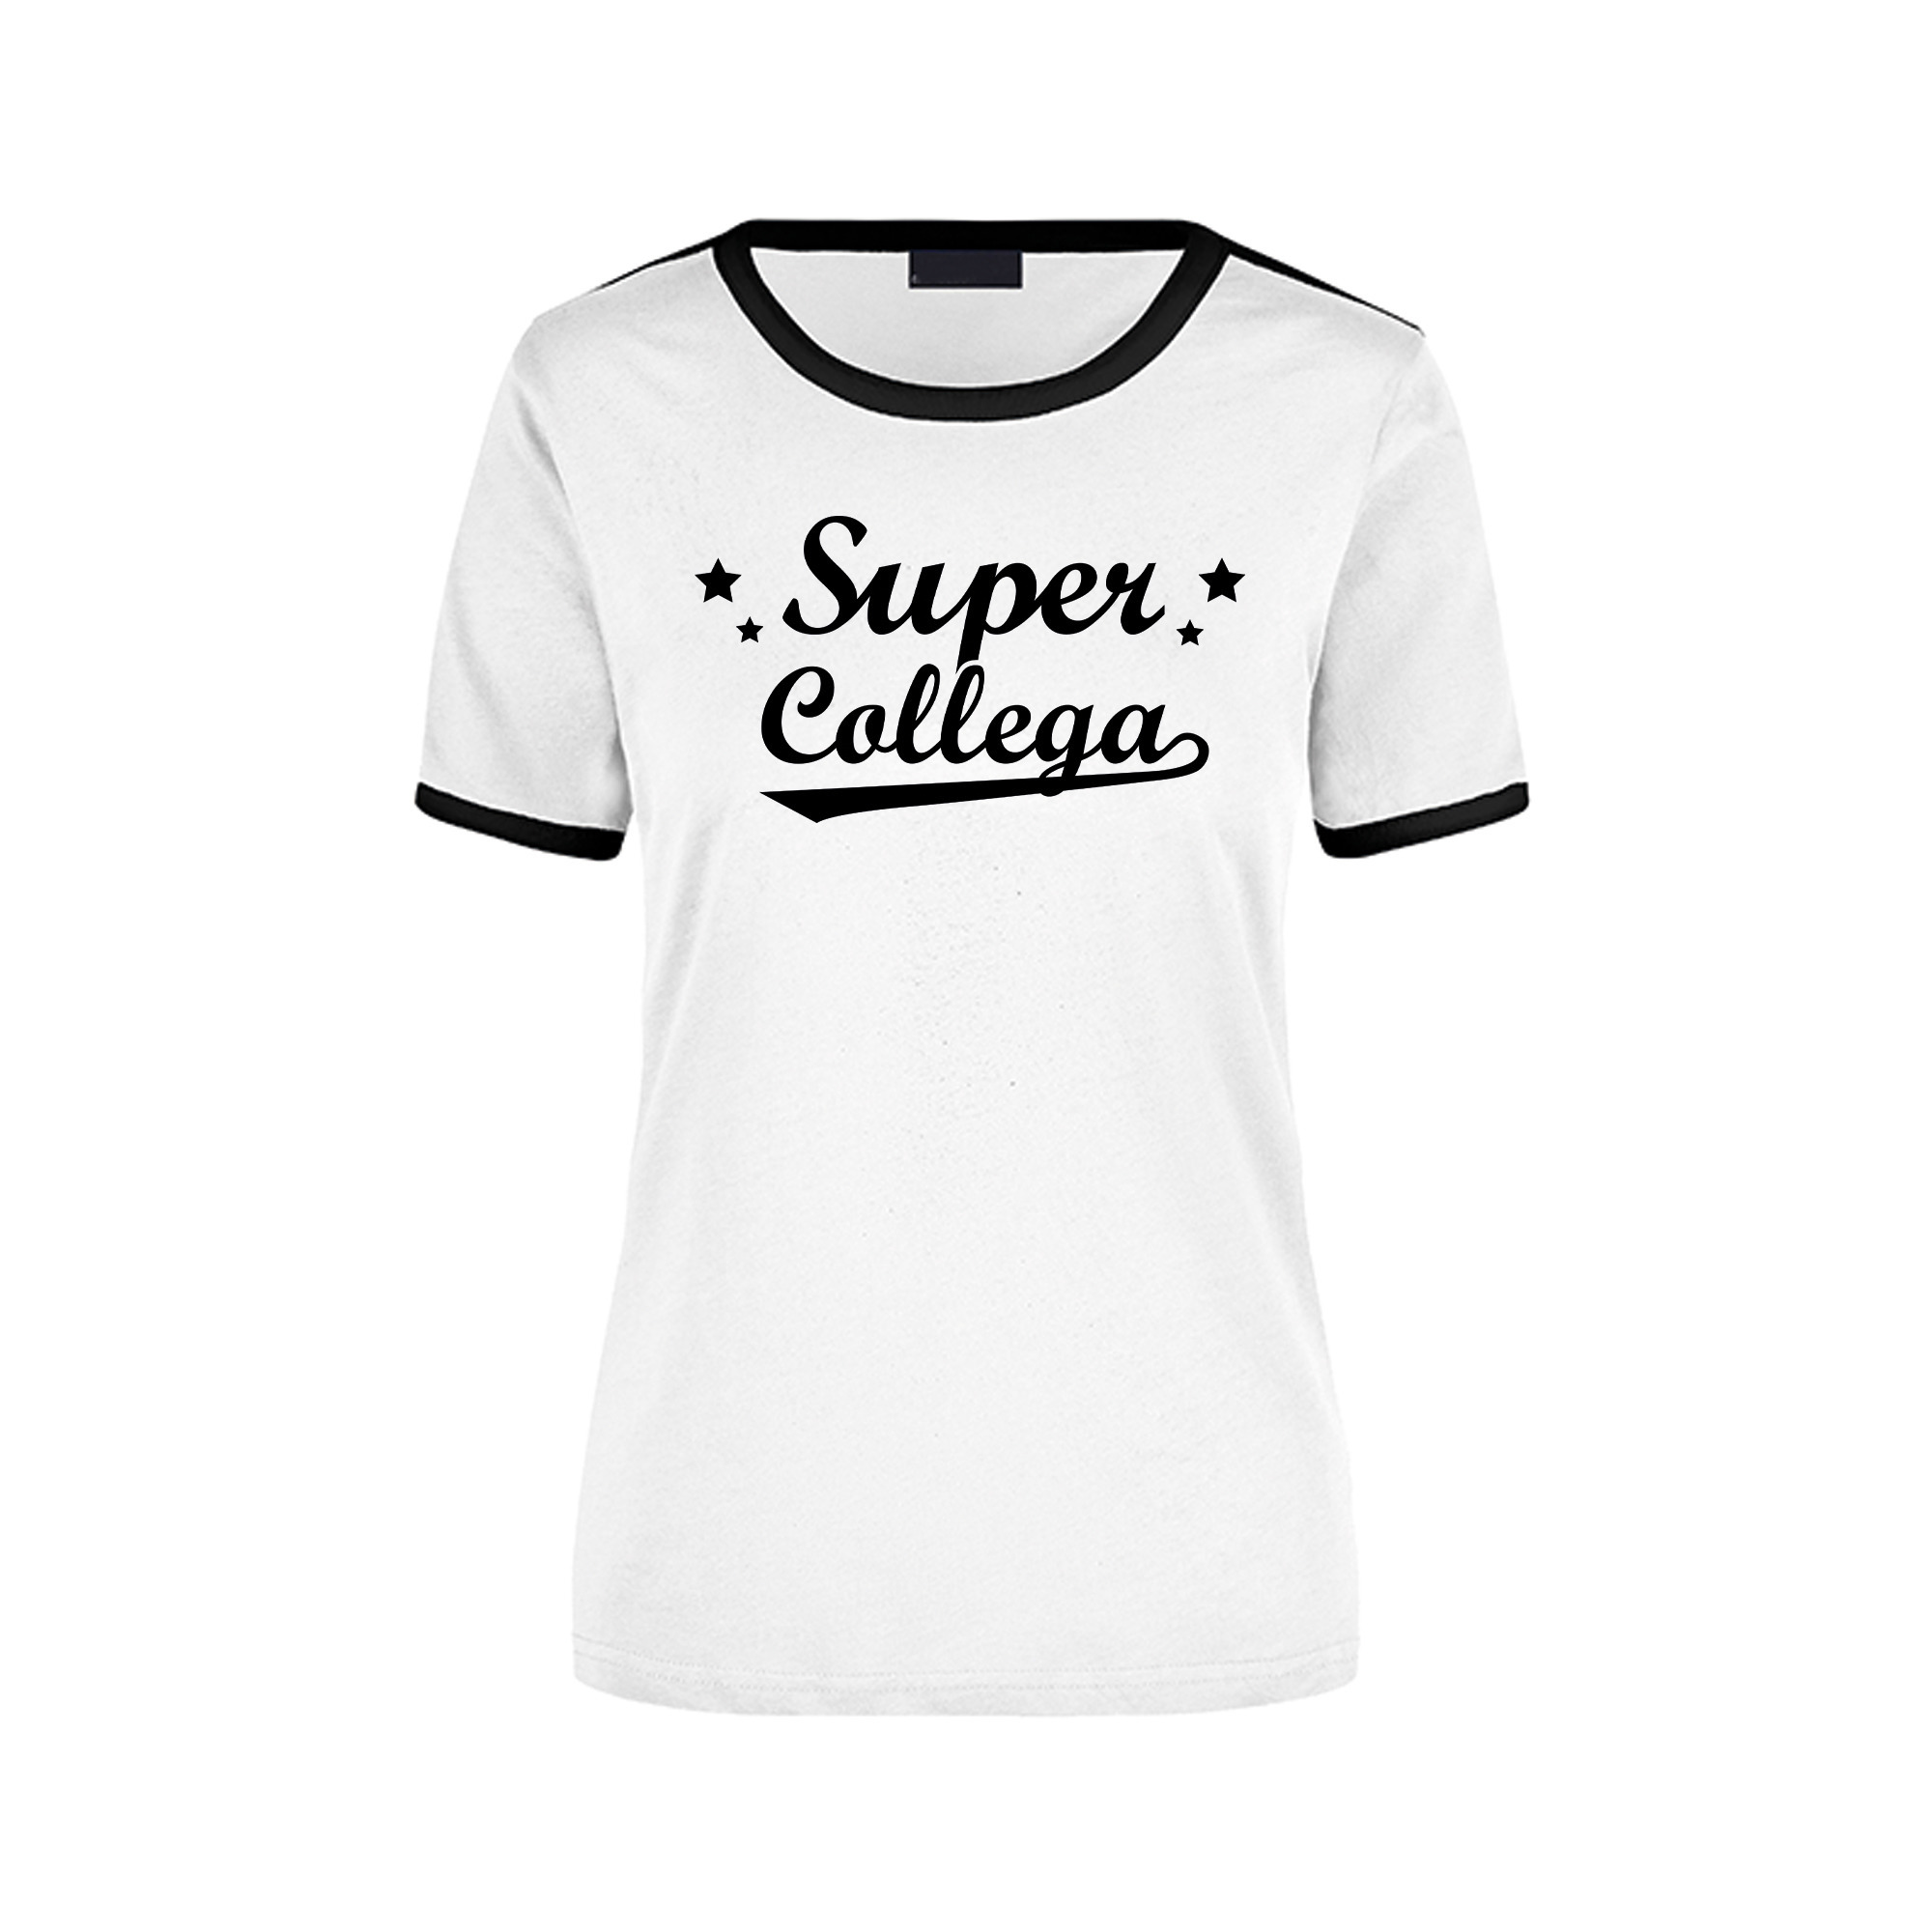 Super collega wit-zwart ringer t-shirt voor dames